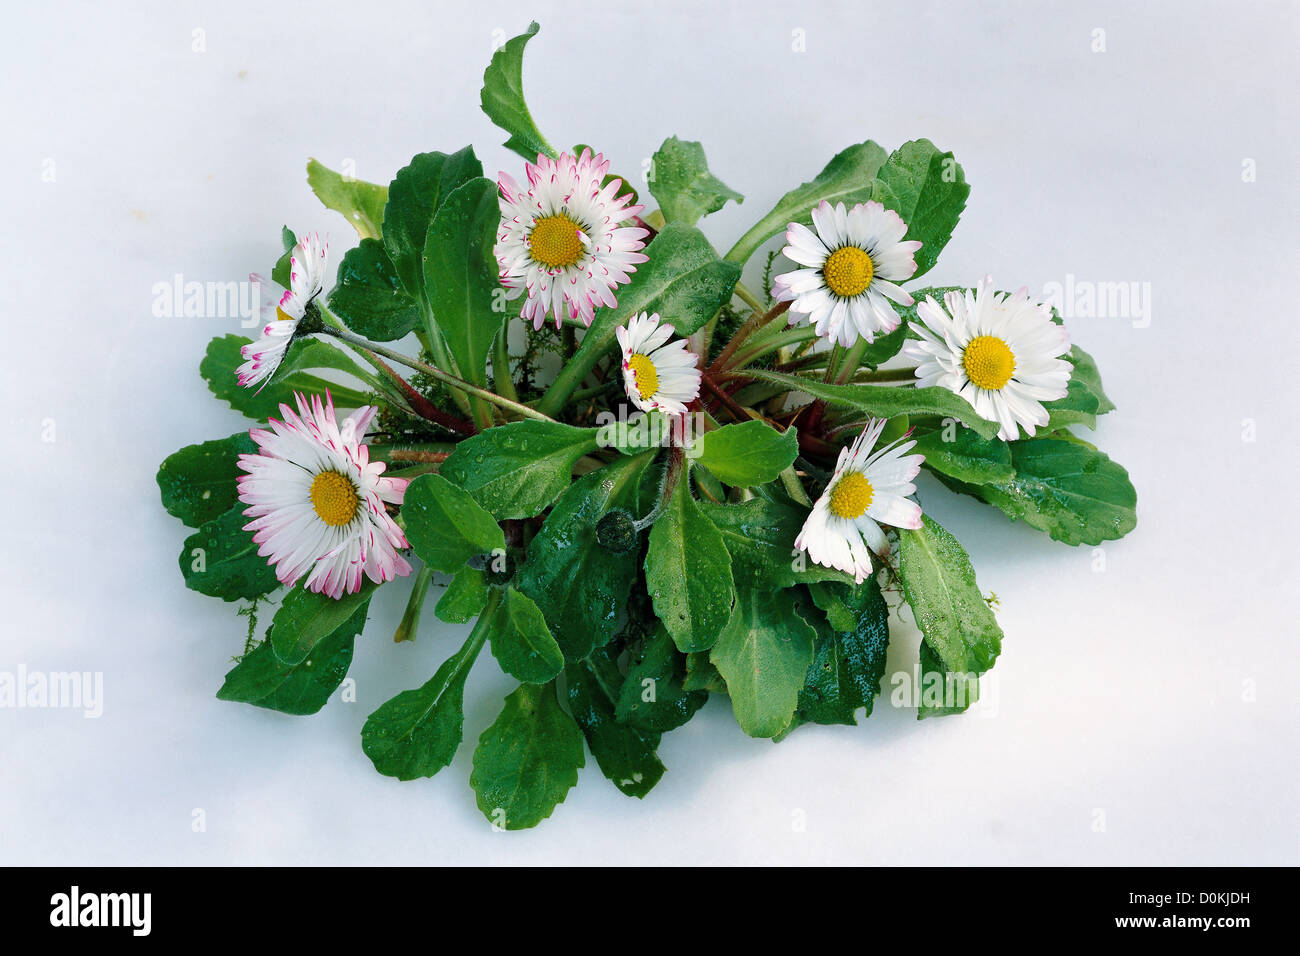 The common daisy (bellis perennis). Stock Photo